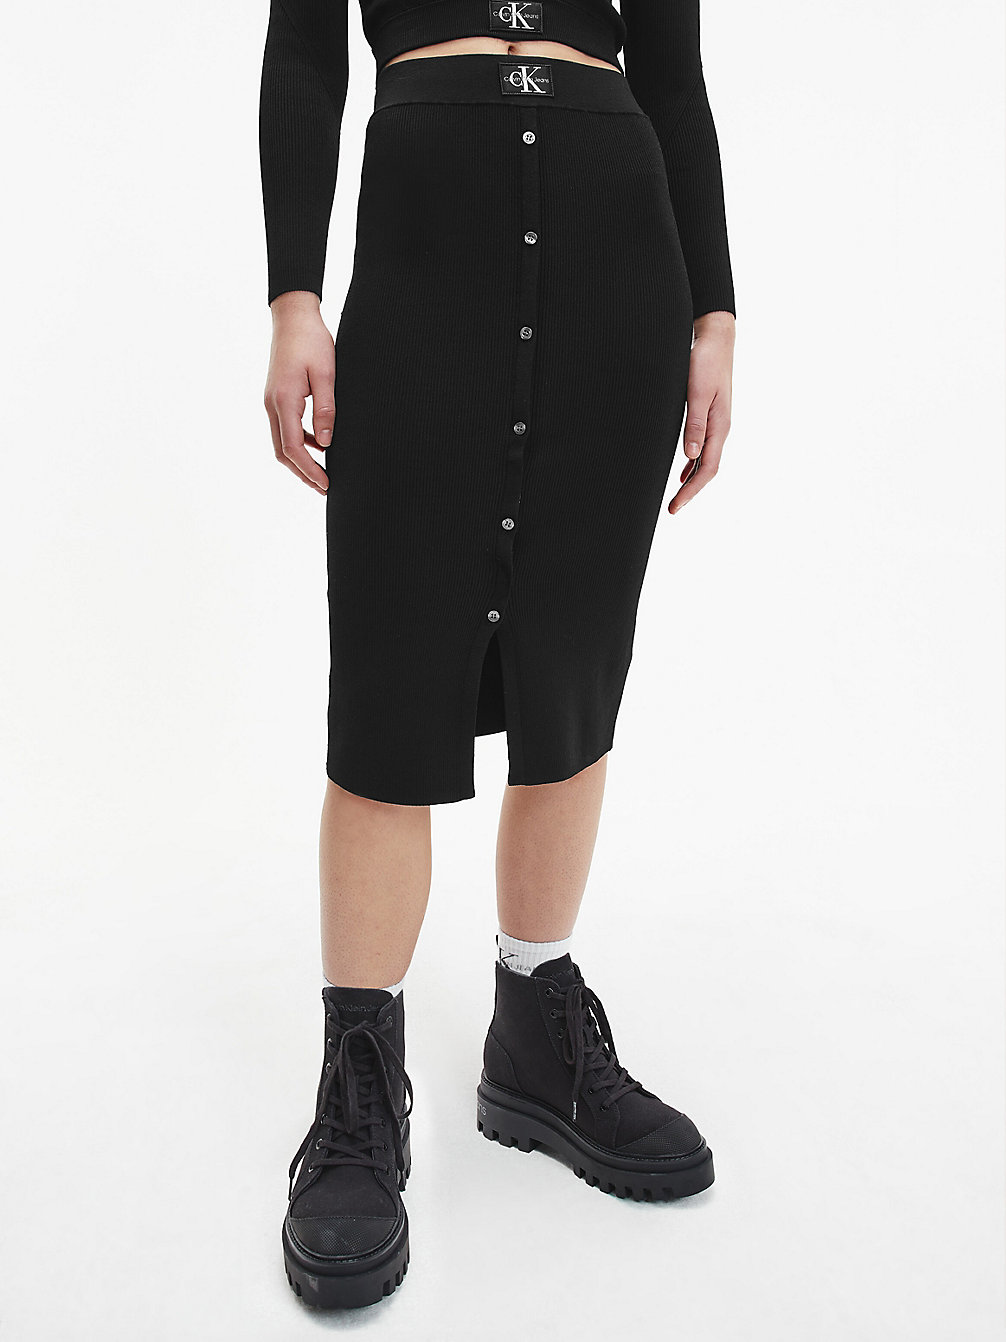 CK BLACK Soft Knit Pencil Skirt undefined women Calvin Klein